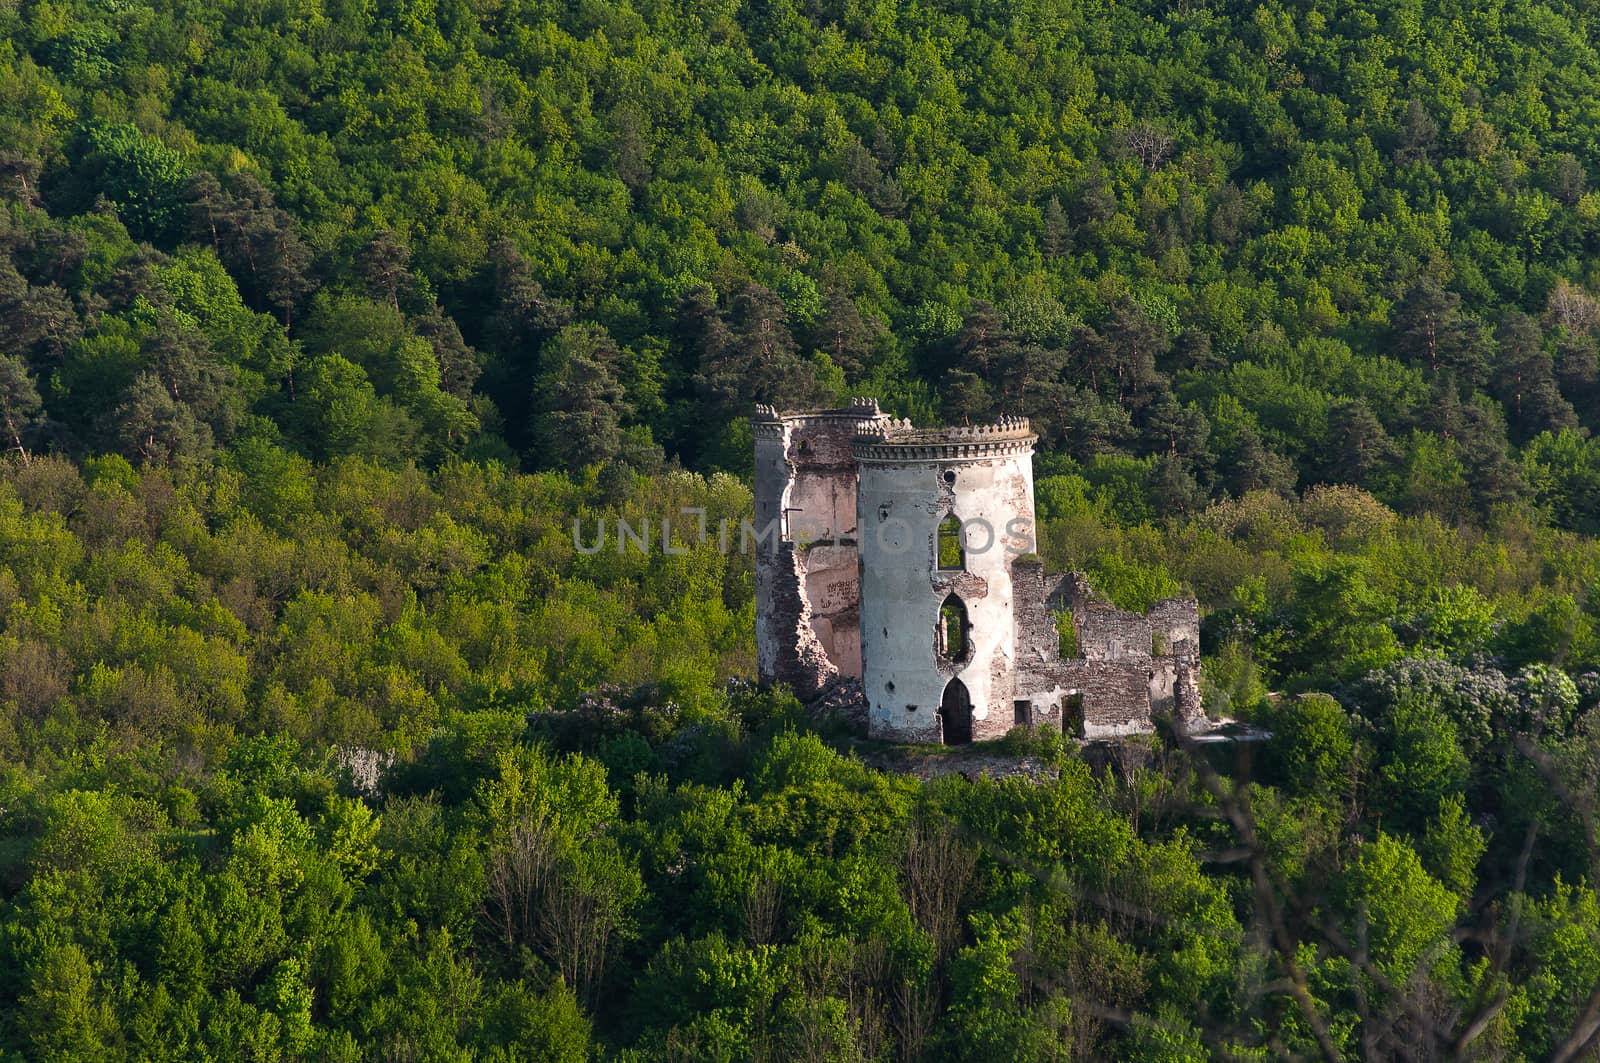 Ruins of Chervonohorodsky (Chervonohrad) Castle in Ternopil region of Ukraine